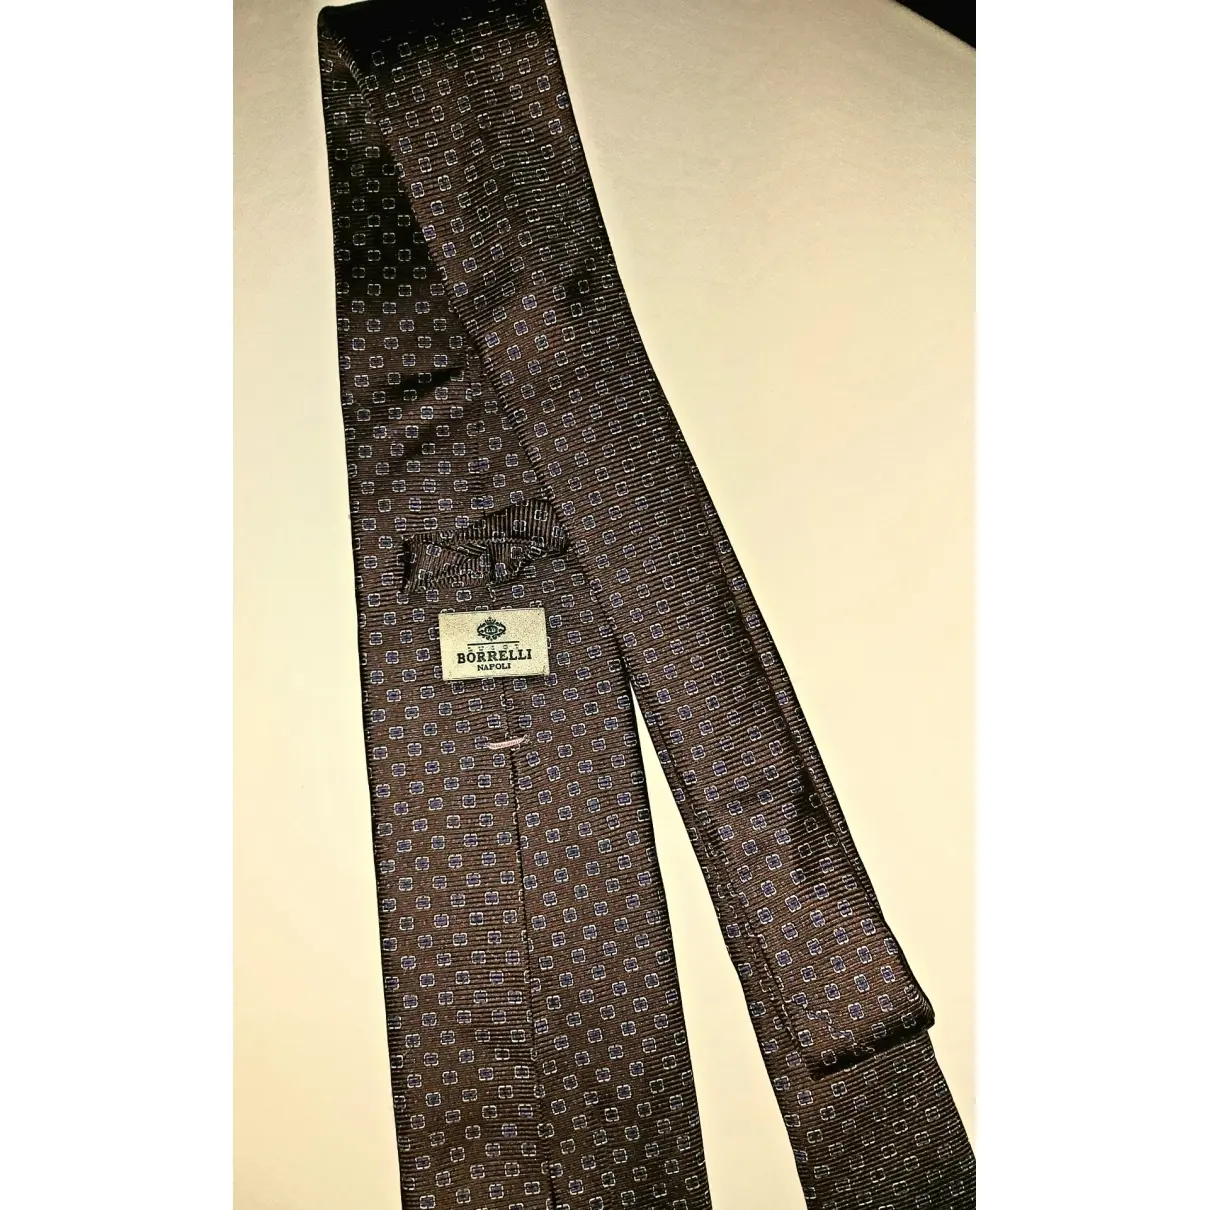 Borrelli Silk tie for sale